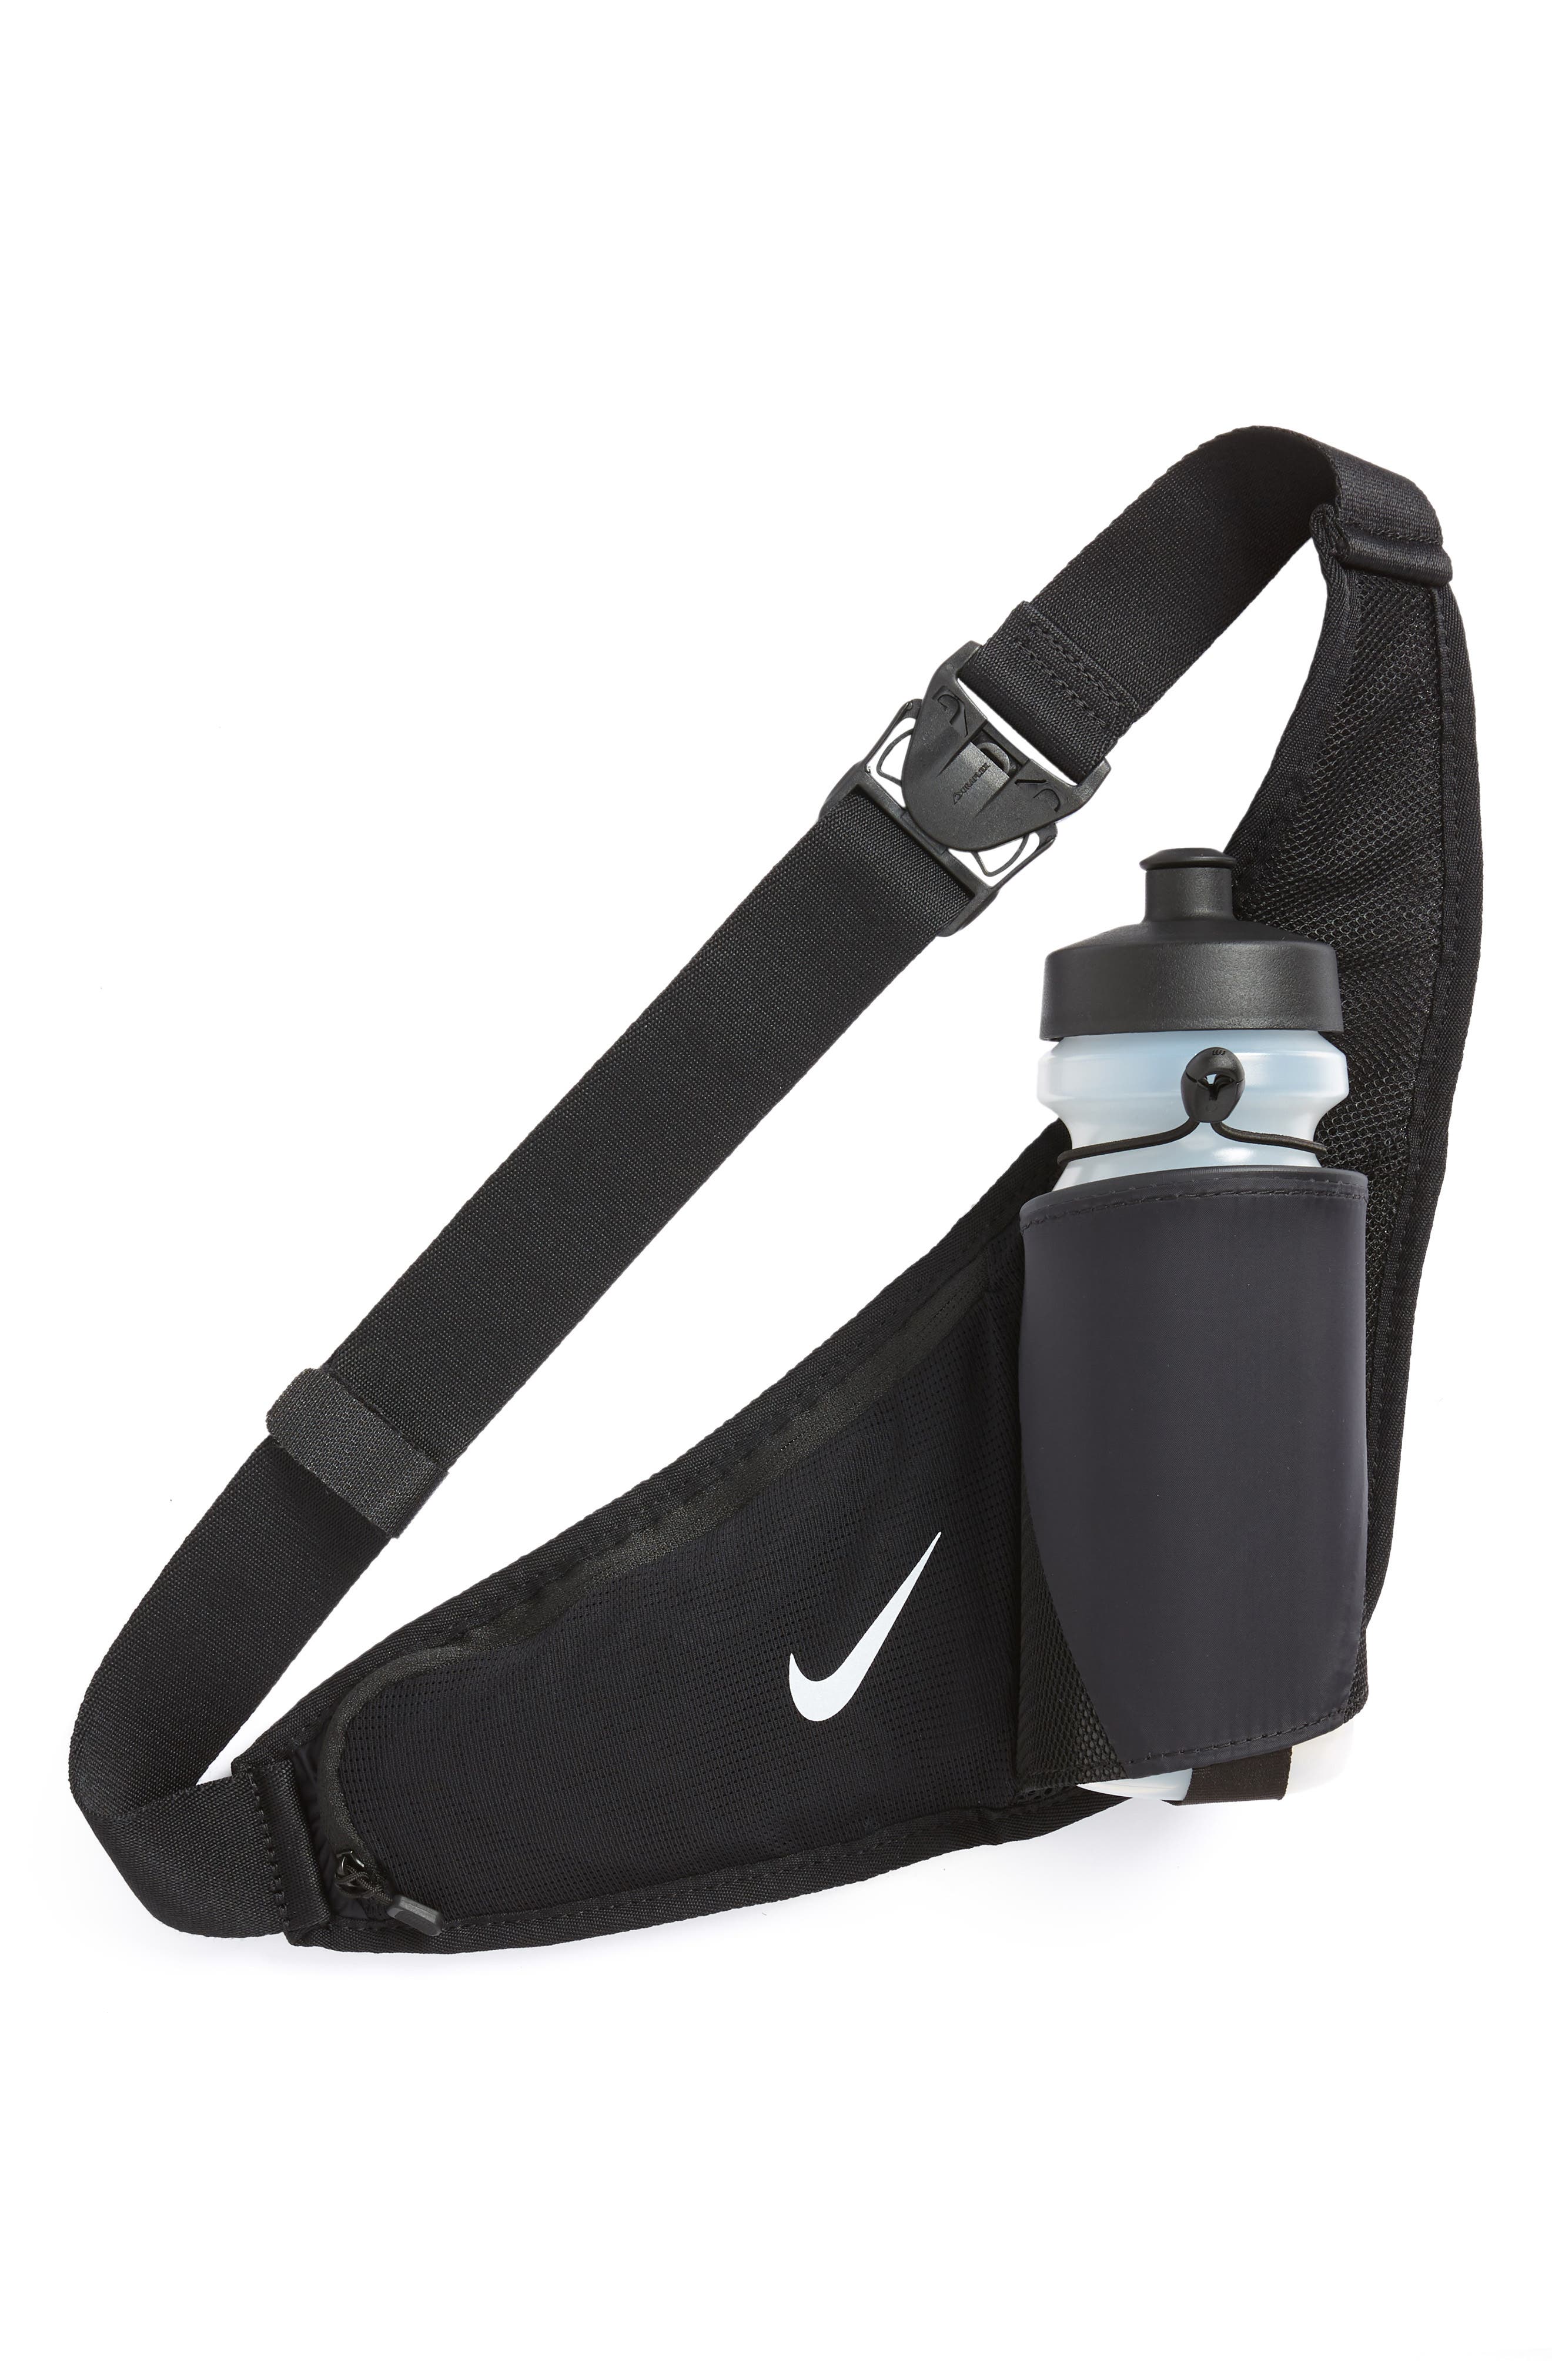 nike running belt with water bottle